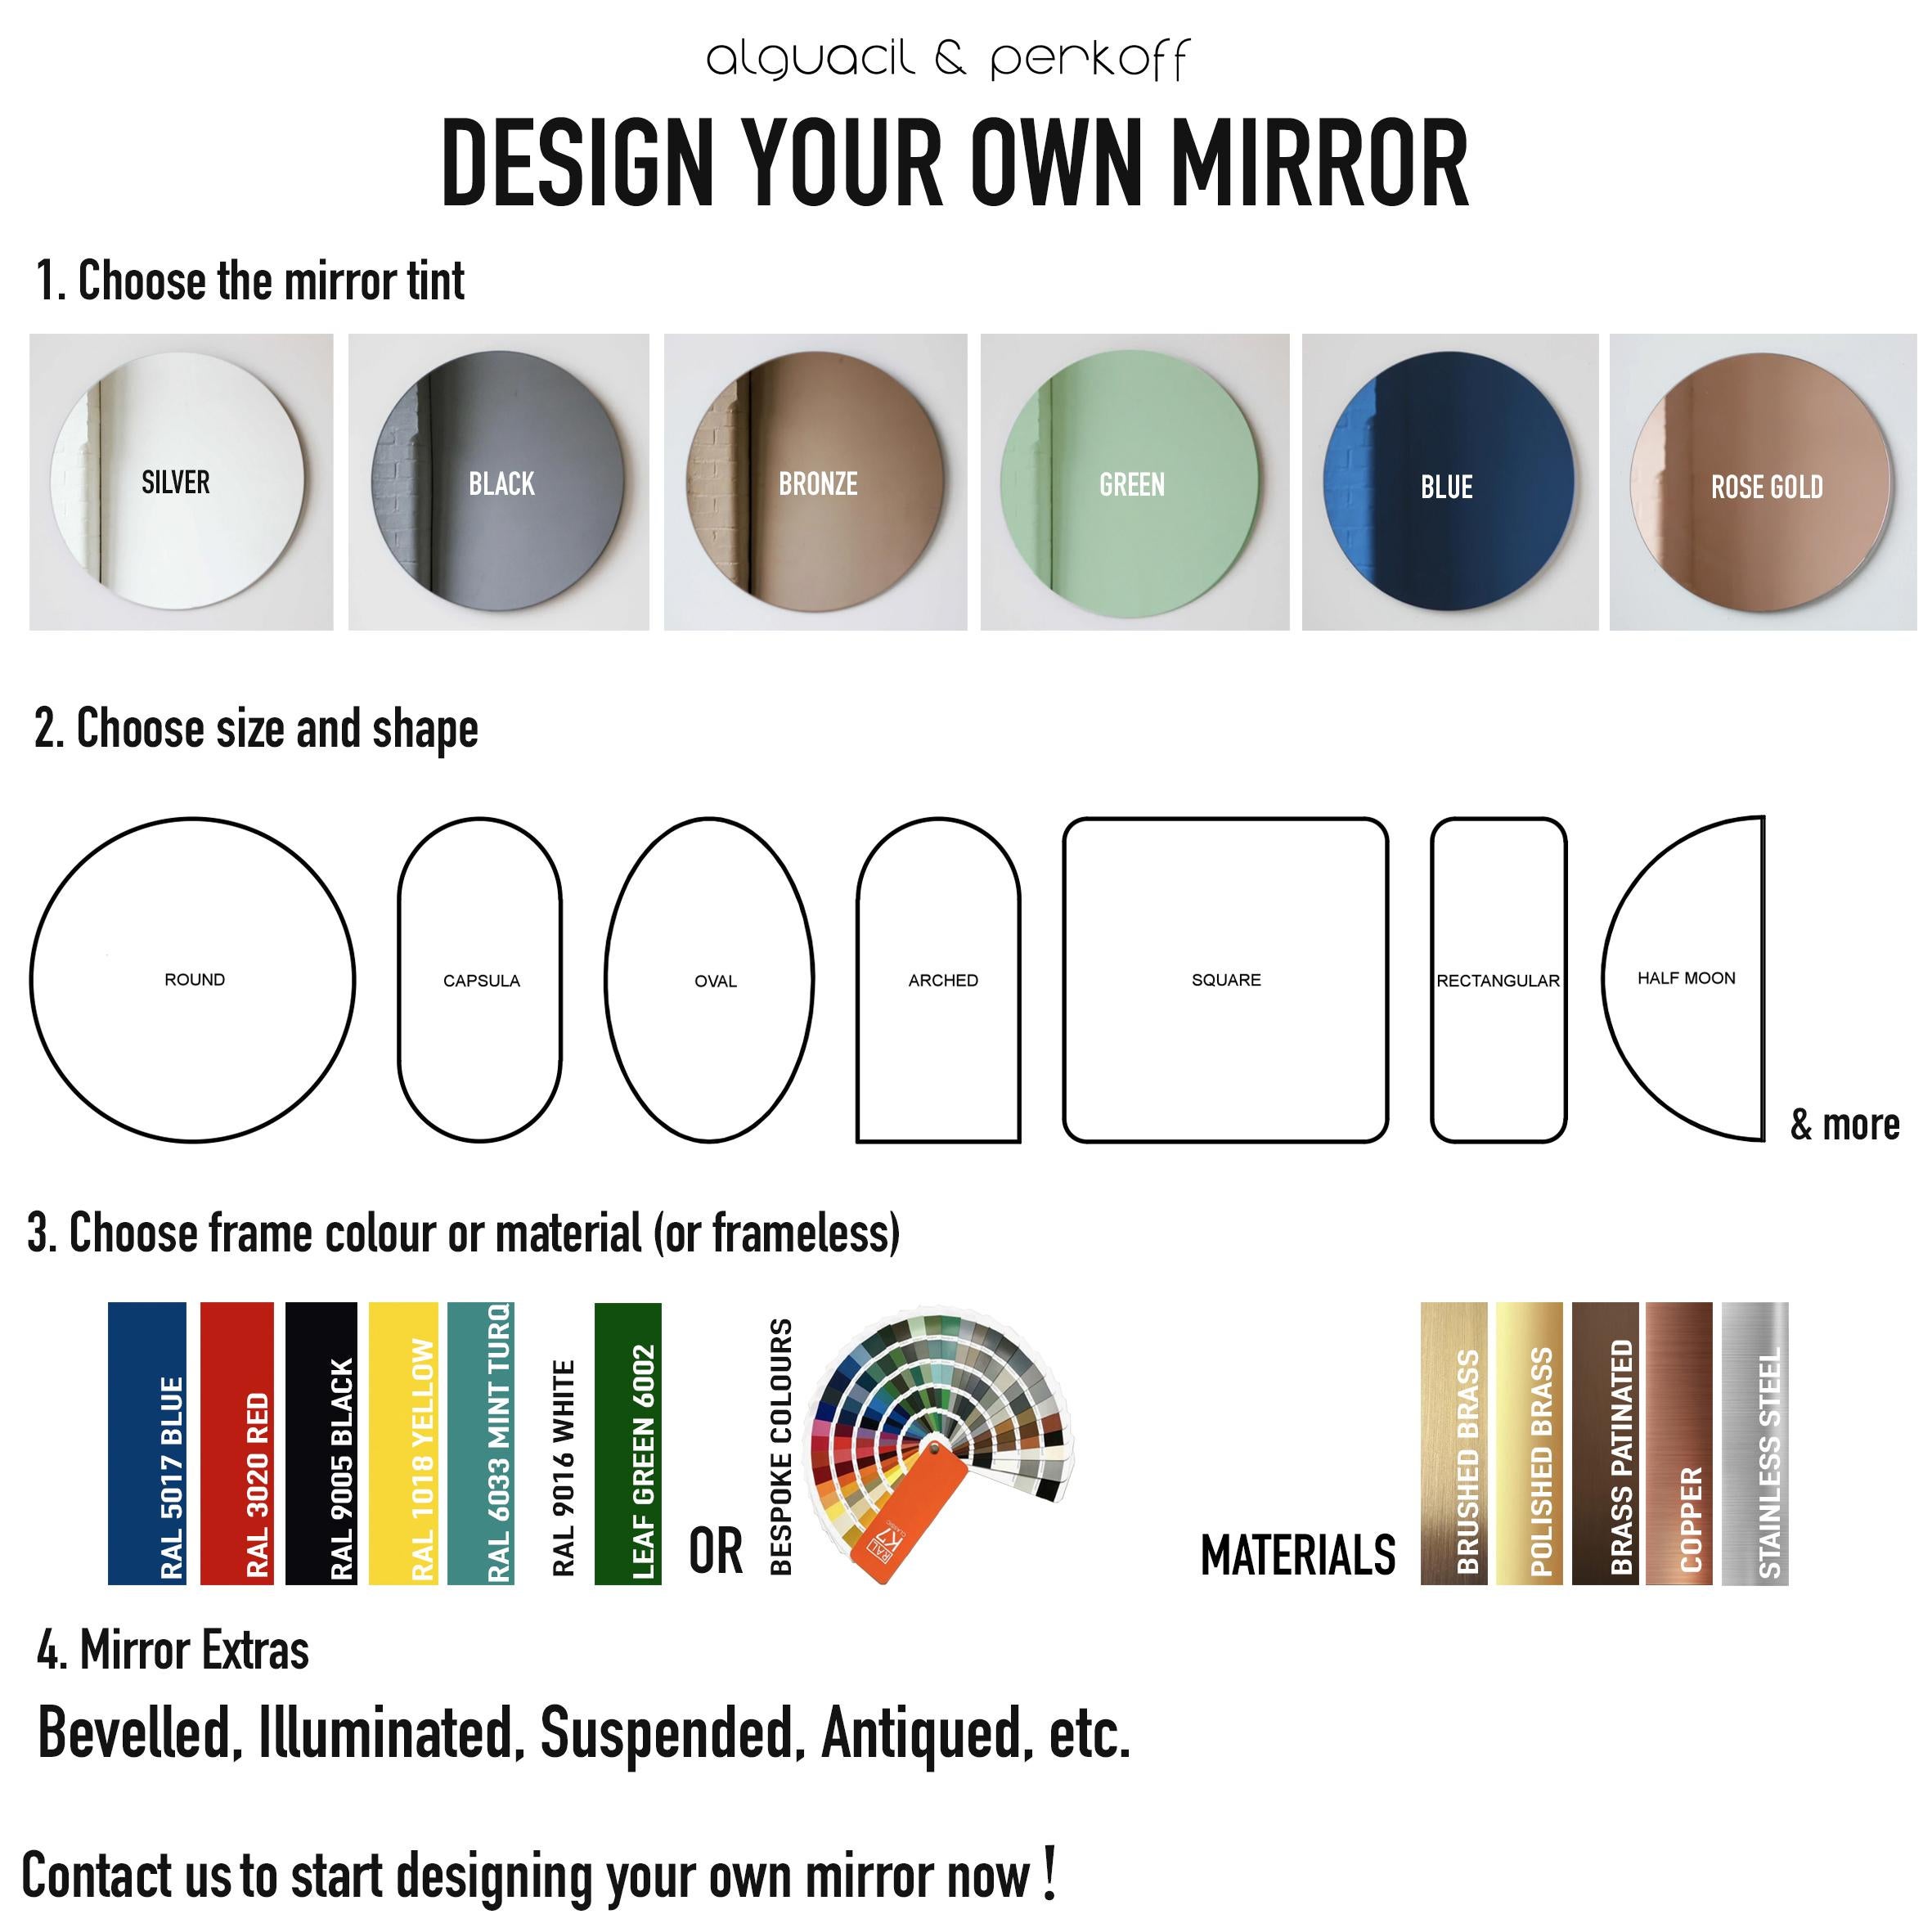 Orbis Round Contemporary Custom Mirror with White Frame, Medium For Sale 2